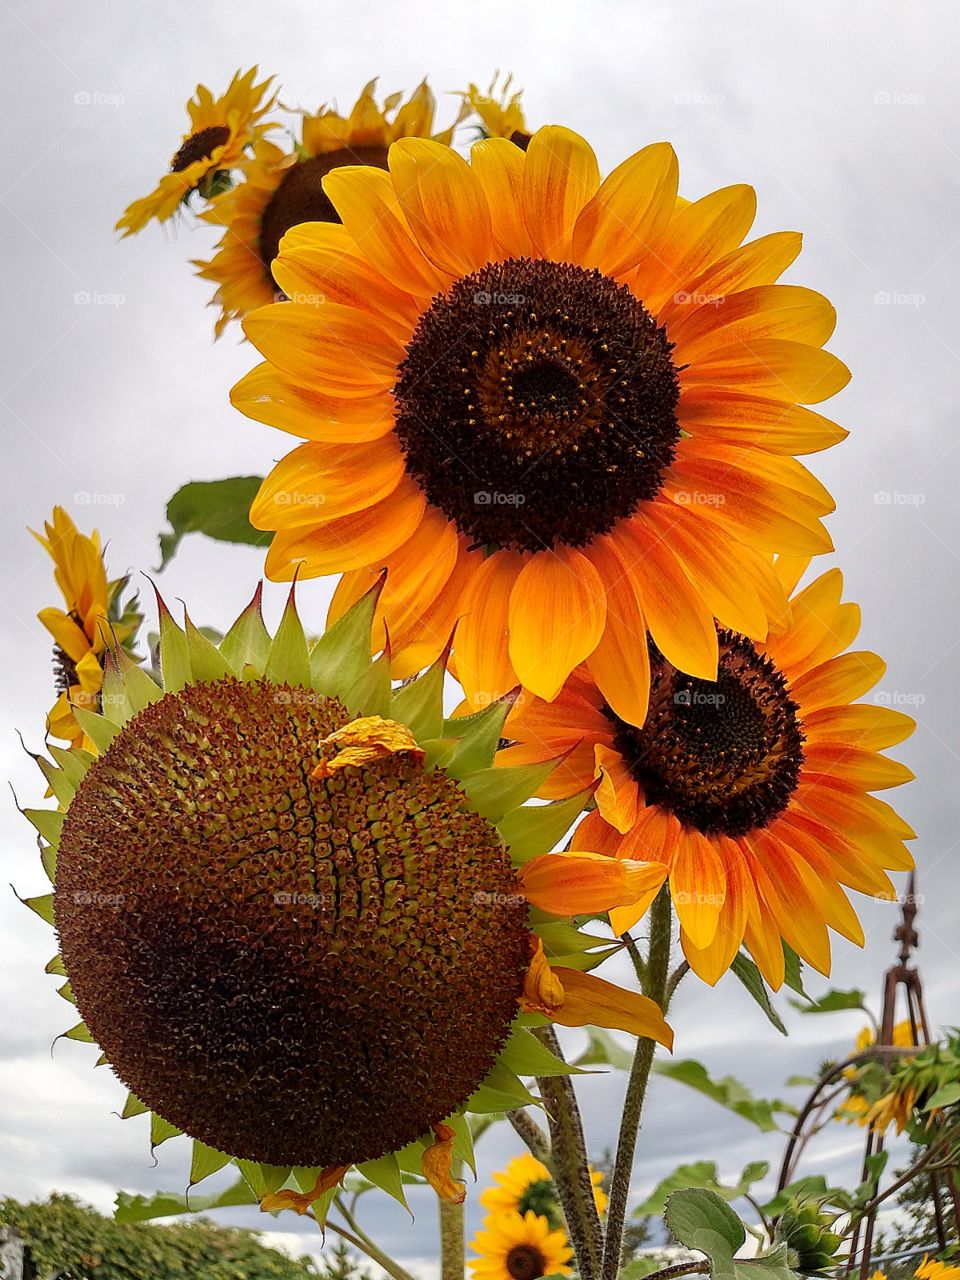 Sunflower Blooming in the Garden